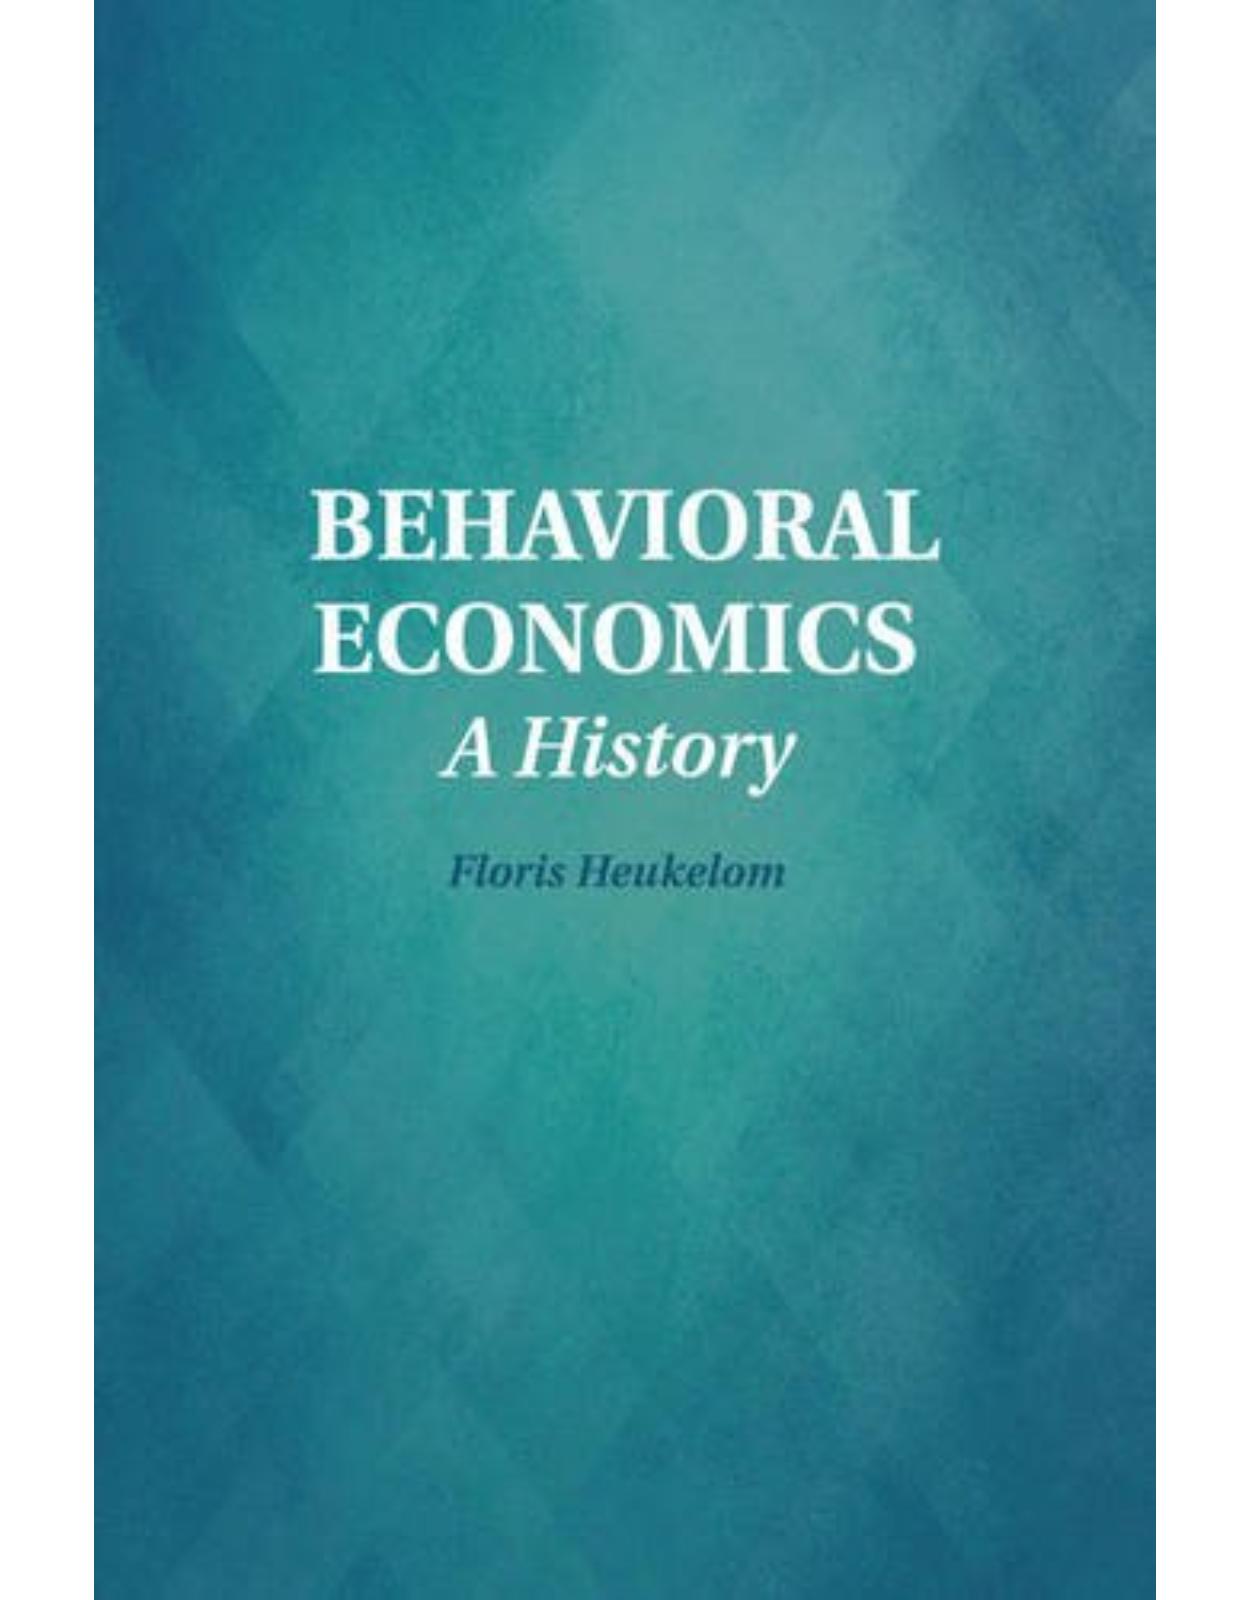 Behavioral Economics: A History (Historical Perspectives on Modern Economics)